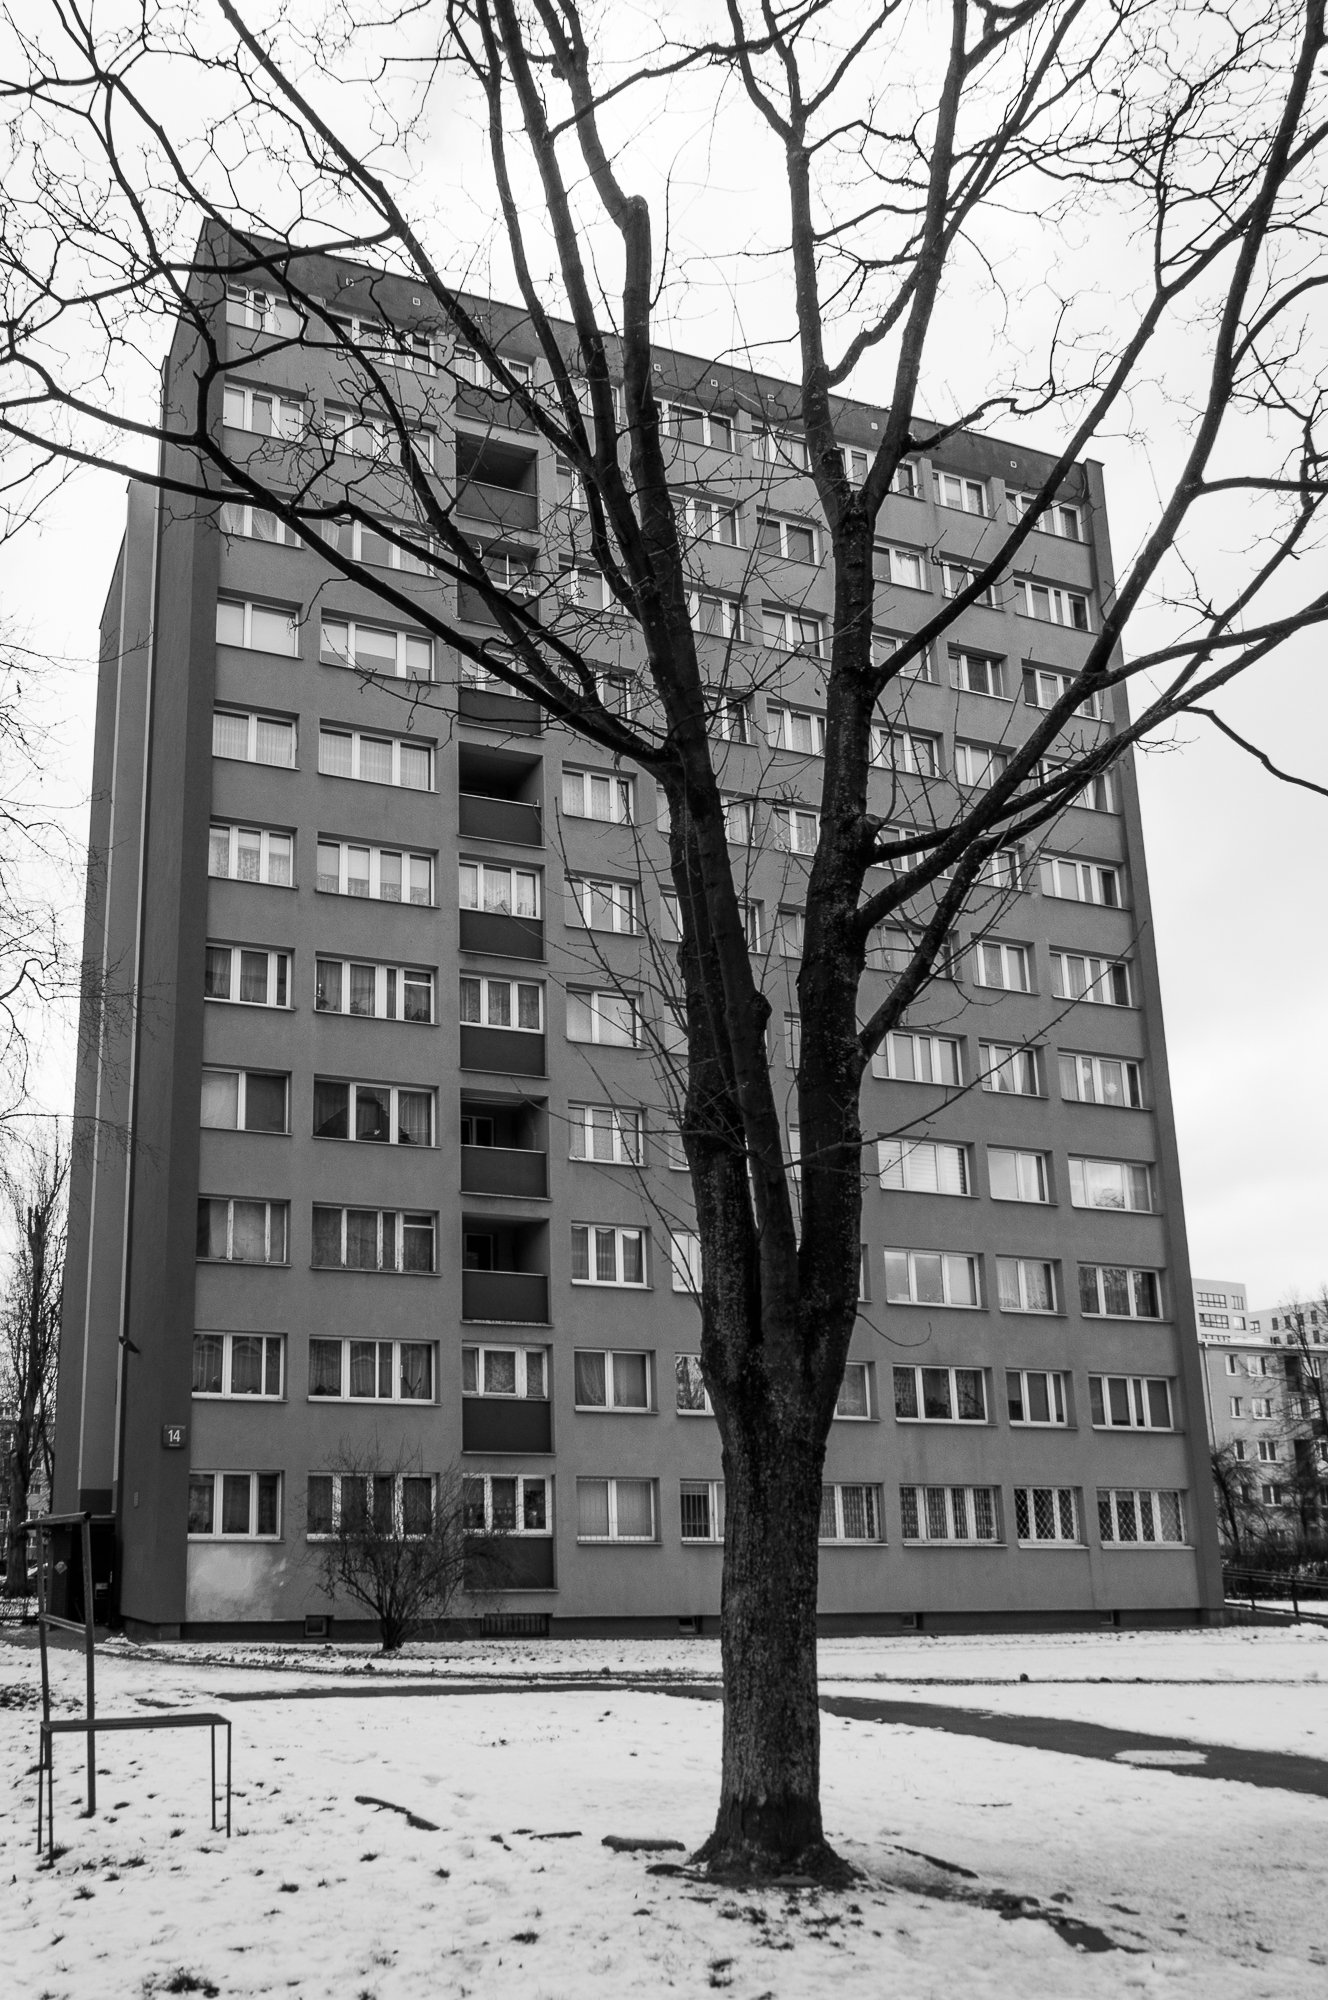 Adam Mazek Photography Warsaw (Warszawa) 2019. Post: "People are people." Tree and block of flats.